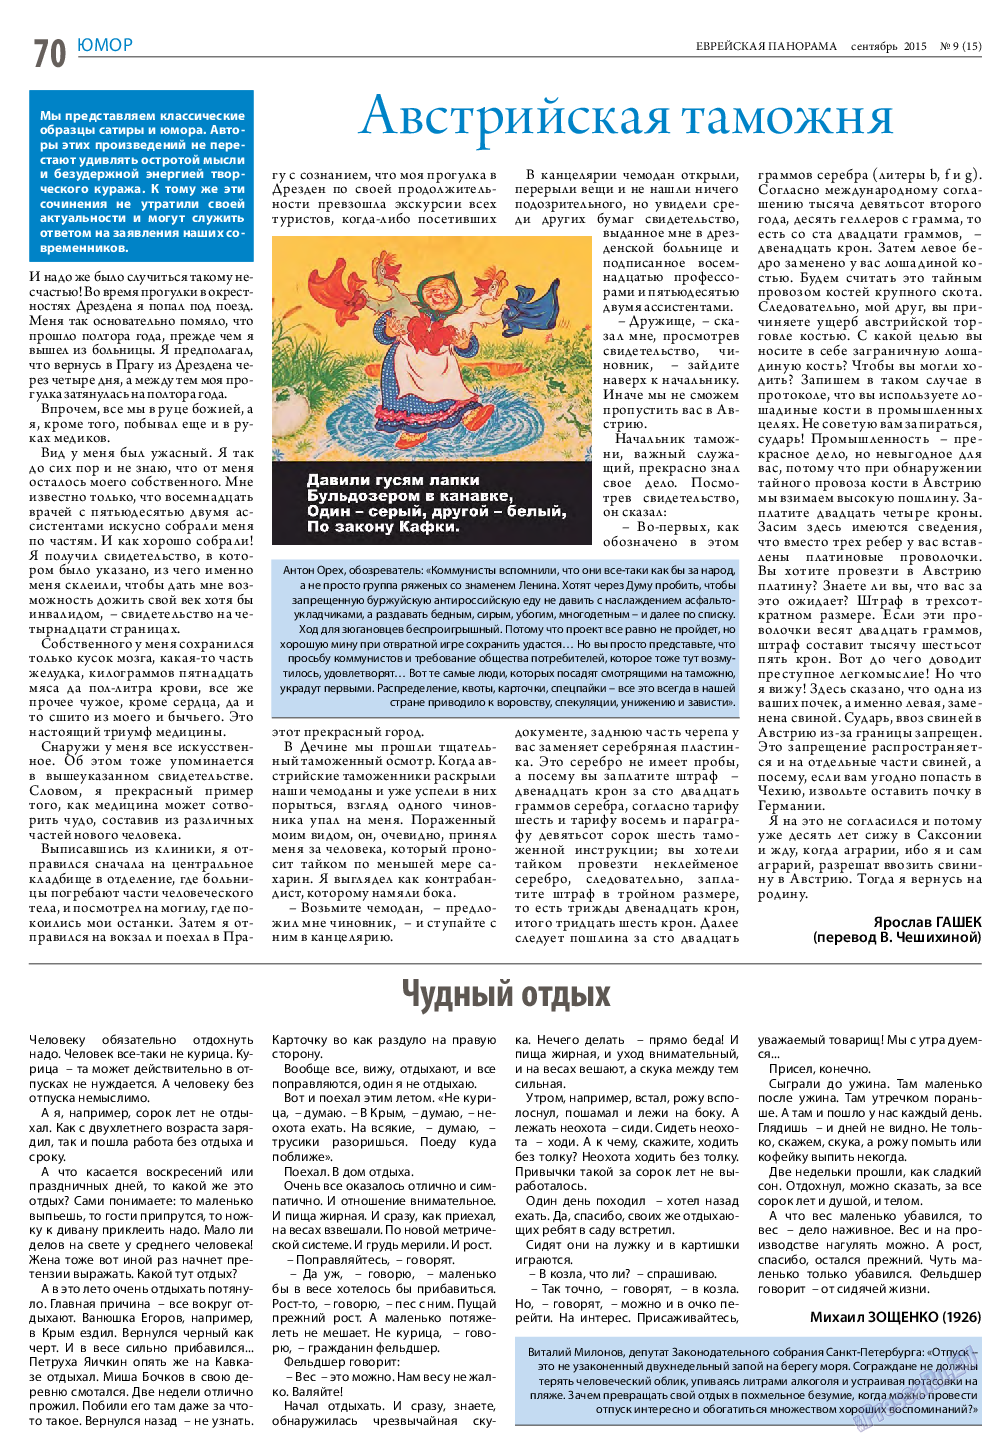 Еврейская панорама, газета. 2015 №9 стр.70